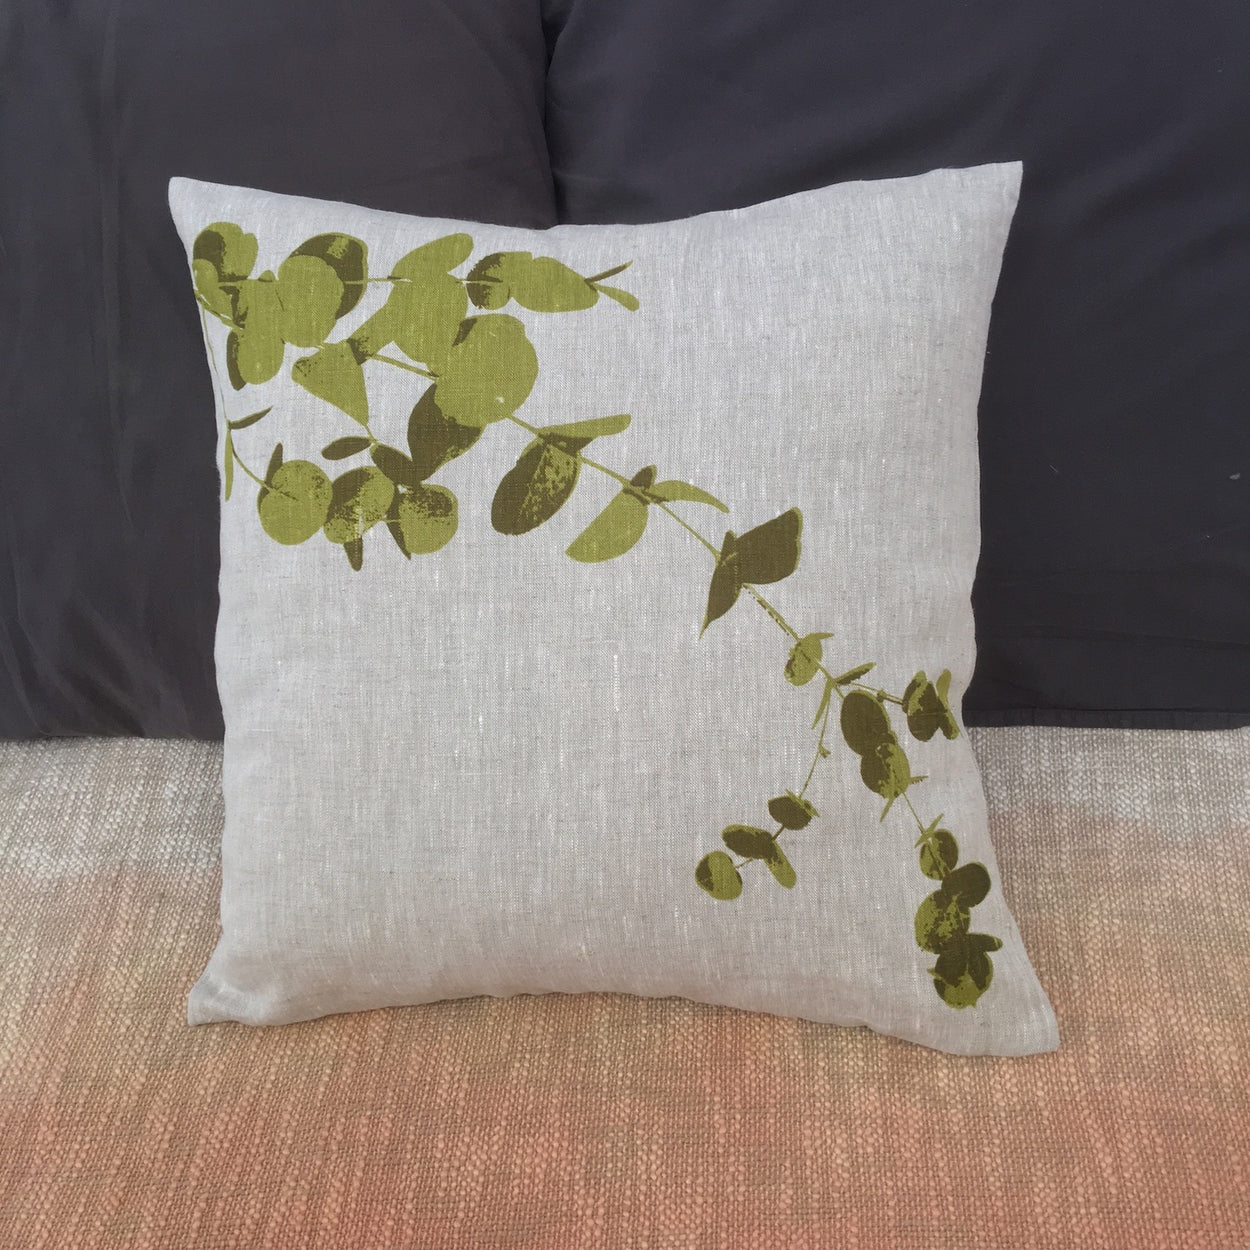 Photograph of eucalyptus leaves screenprinted on a cushion cover.